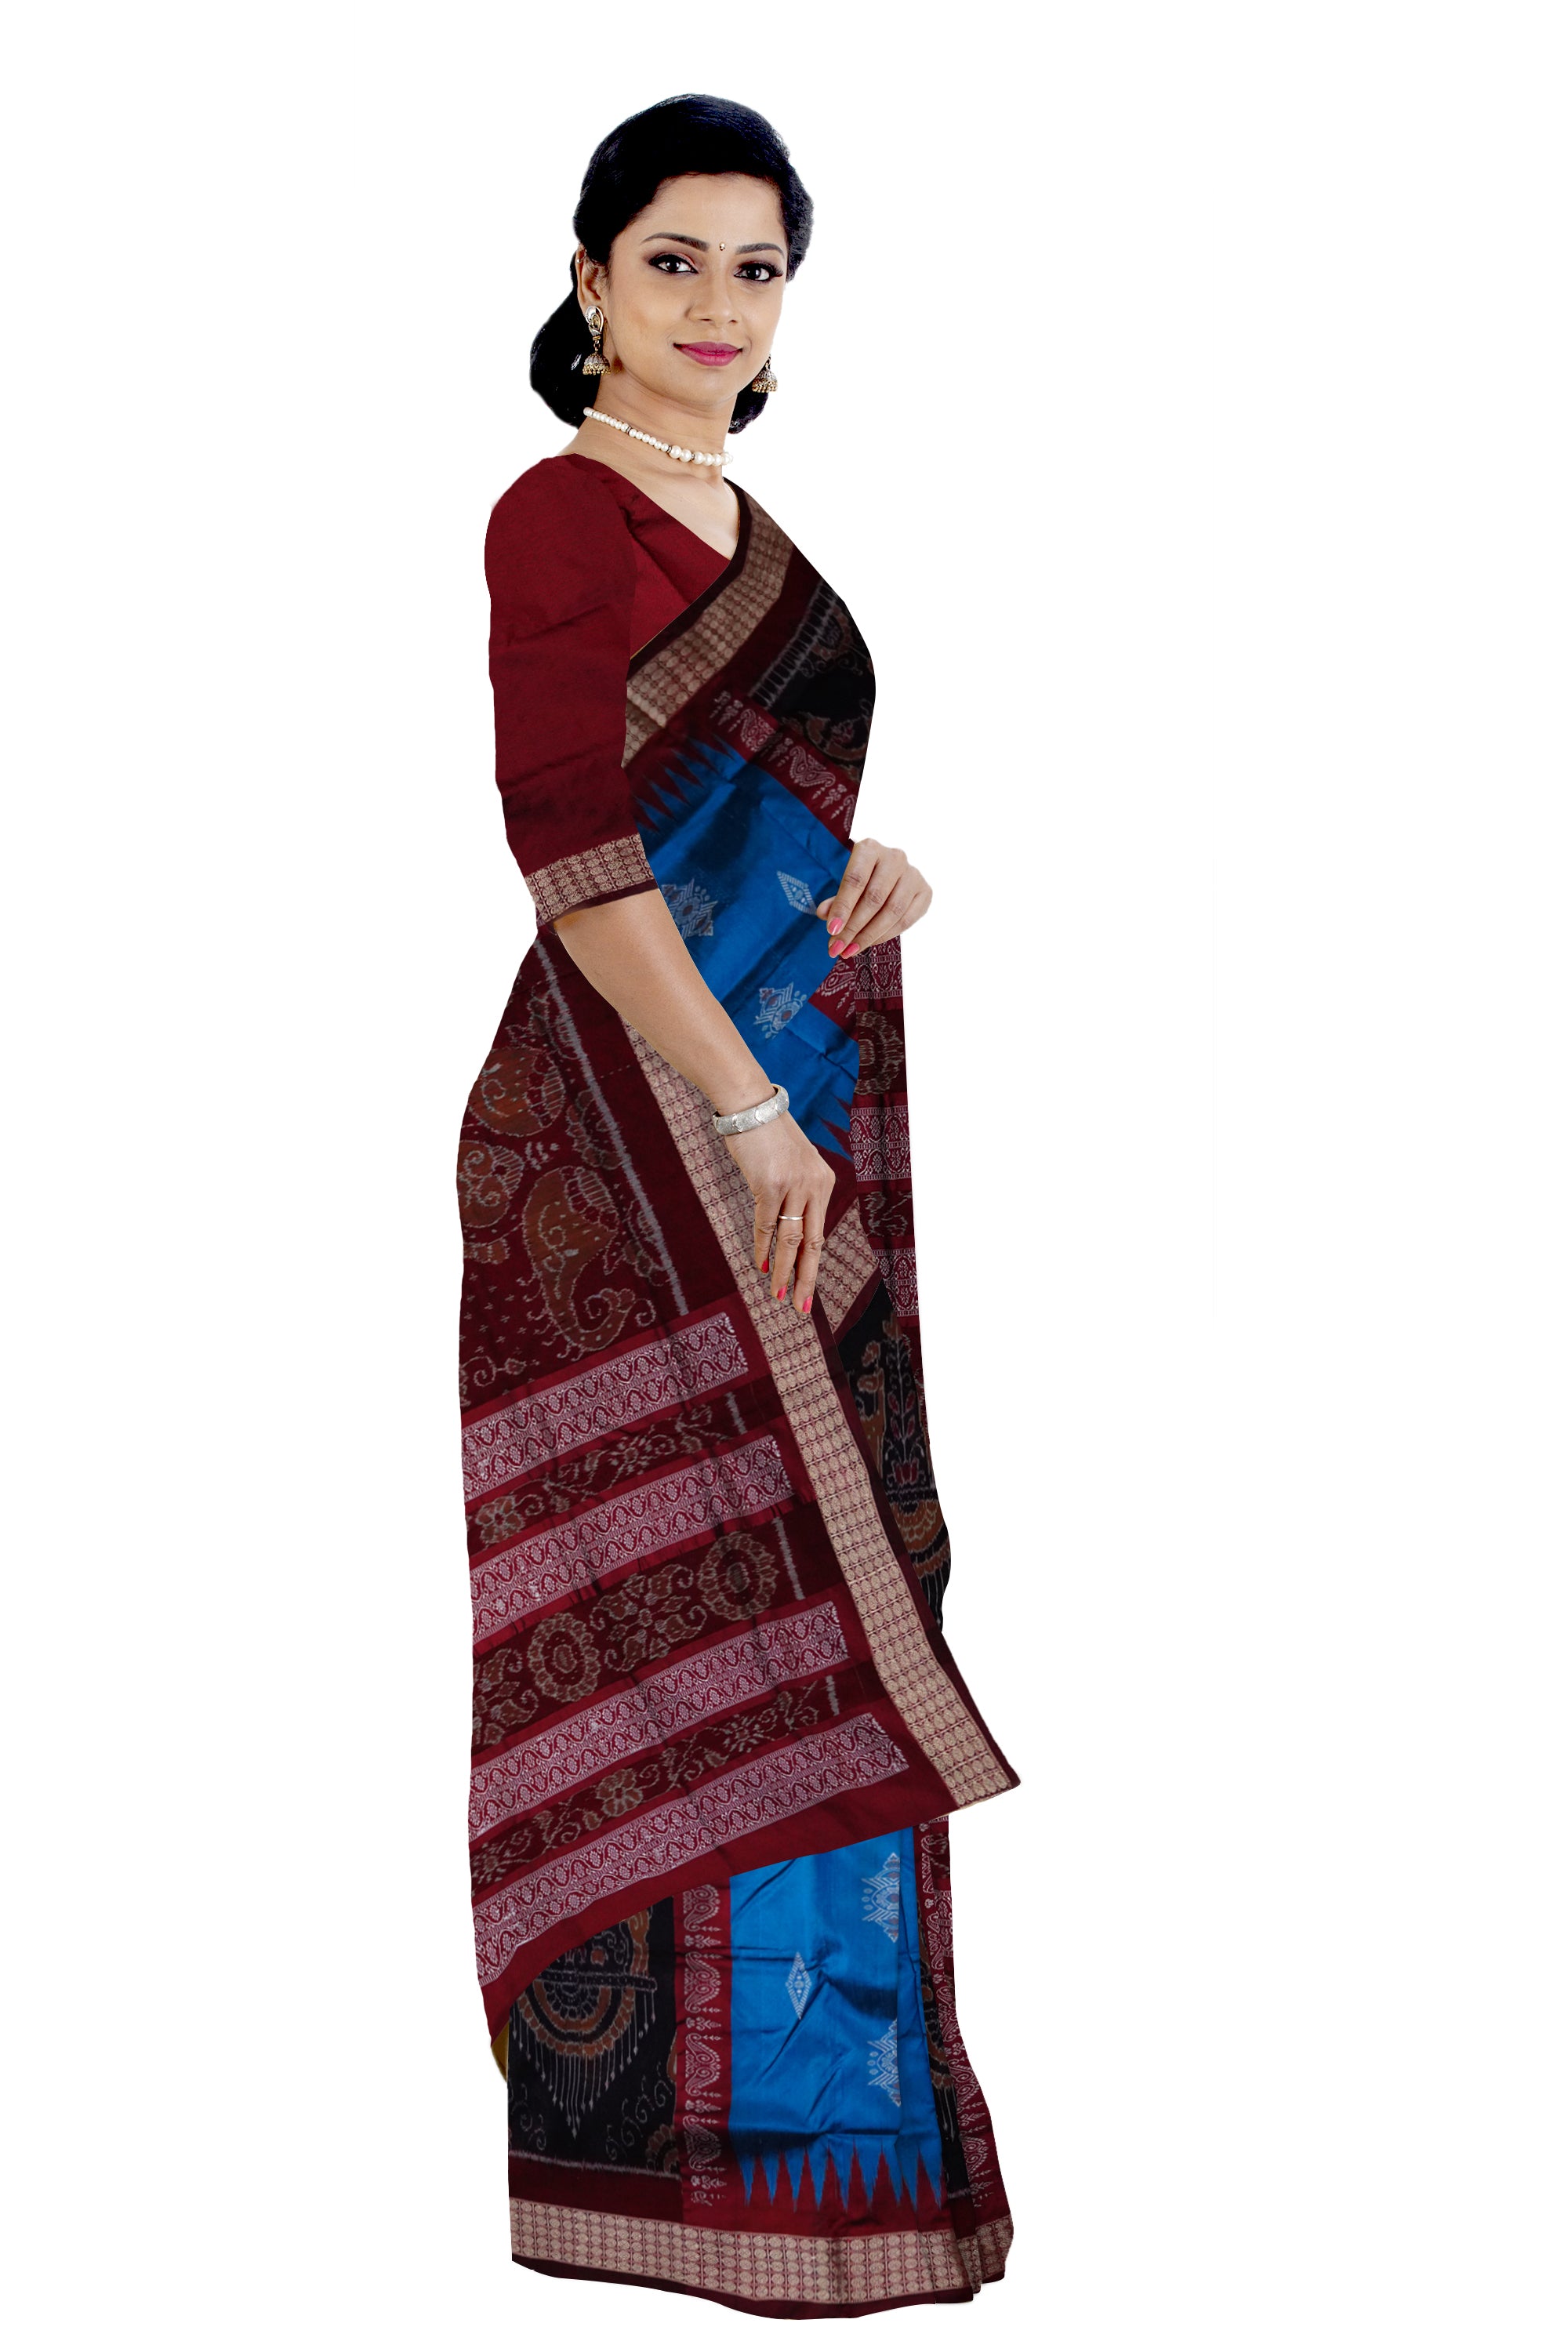 Blue and Black color bomkei with bandha design Sambalpuri pata saree. - Koshali Arts & Crafts Enterprise